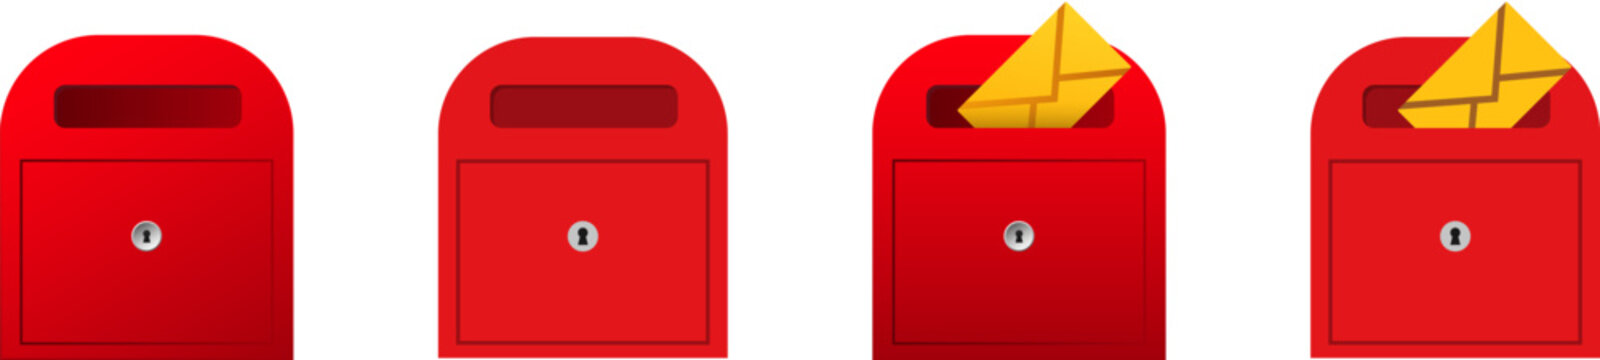 Mailbox red mail box. Shipping postal envelope vector